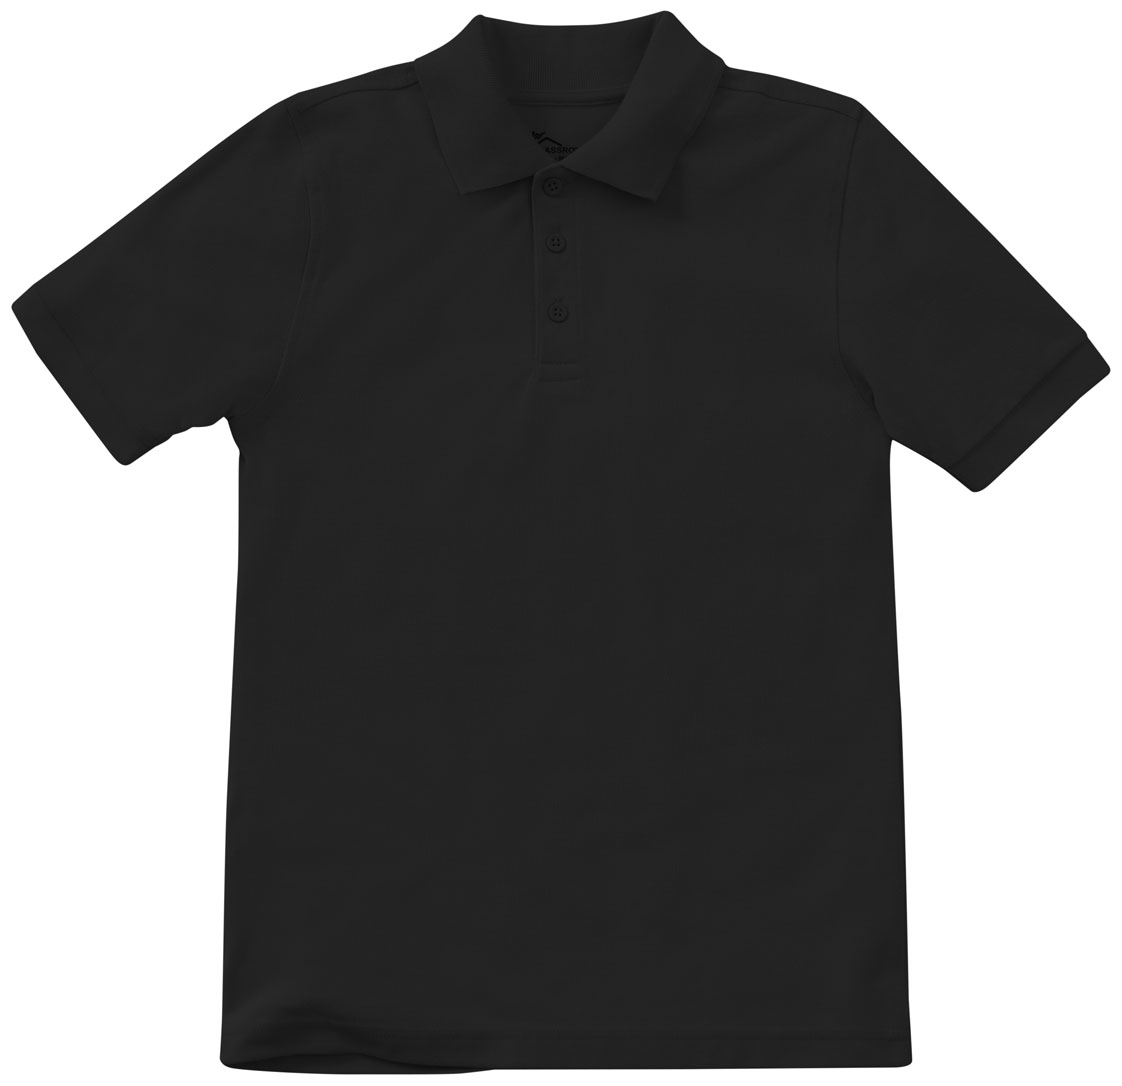 CVC 60/40 Adult short sleeve pique polo shirt with logo